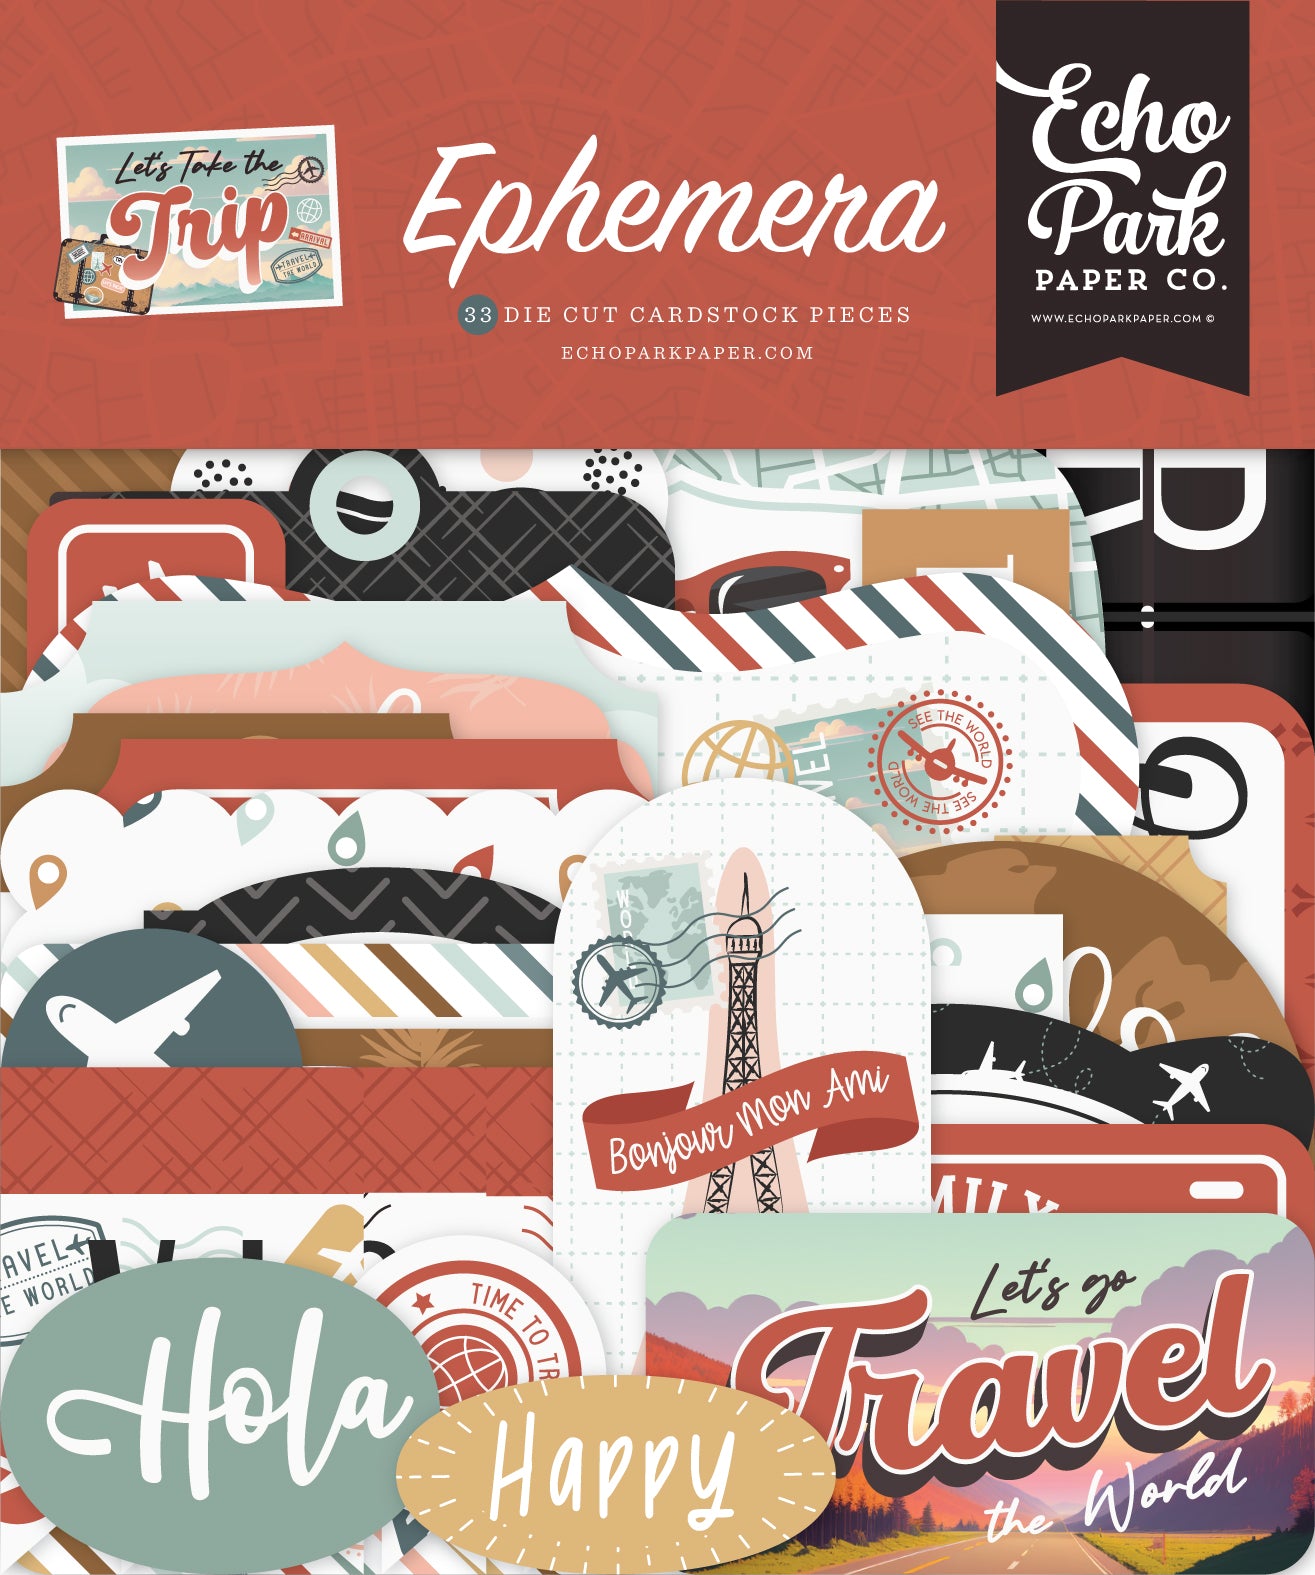 Let's Take the Trip Collection 5x5 Scrapbook Ephemera by Echo Park Paper